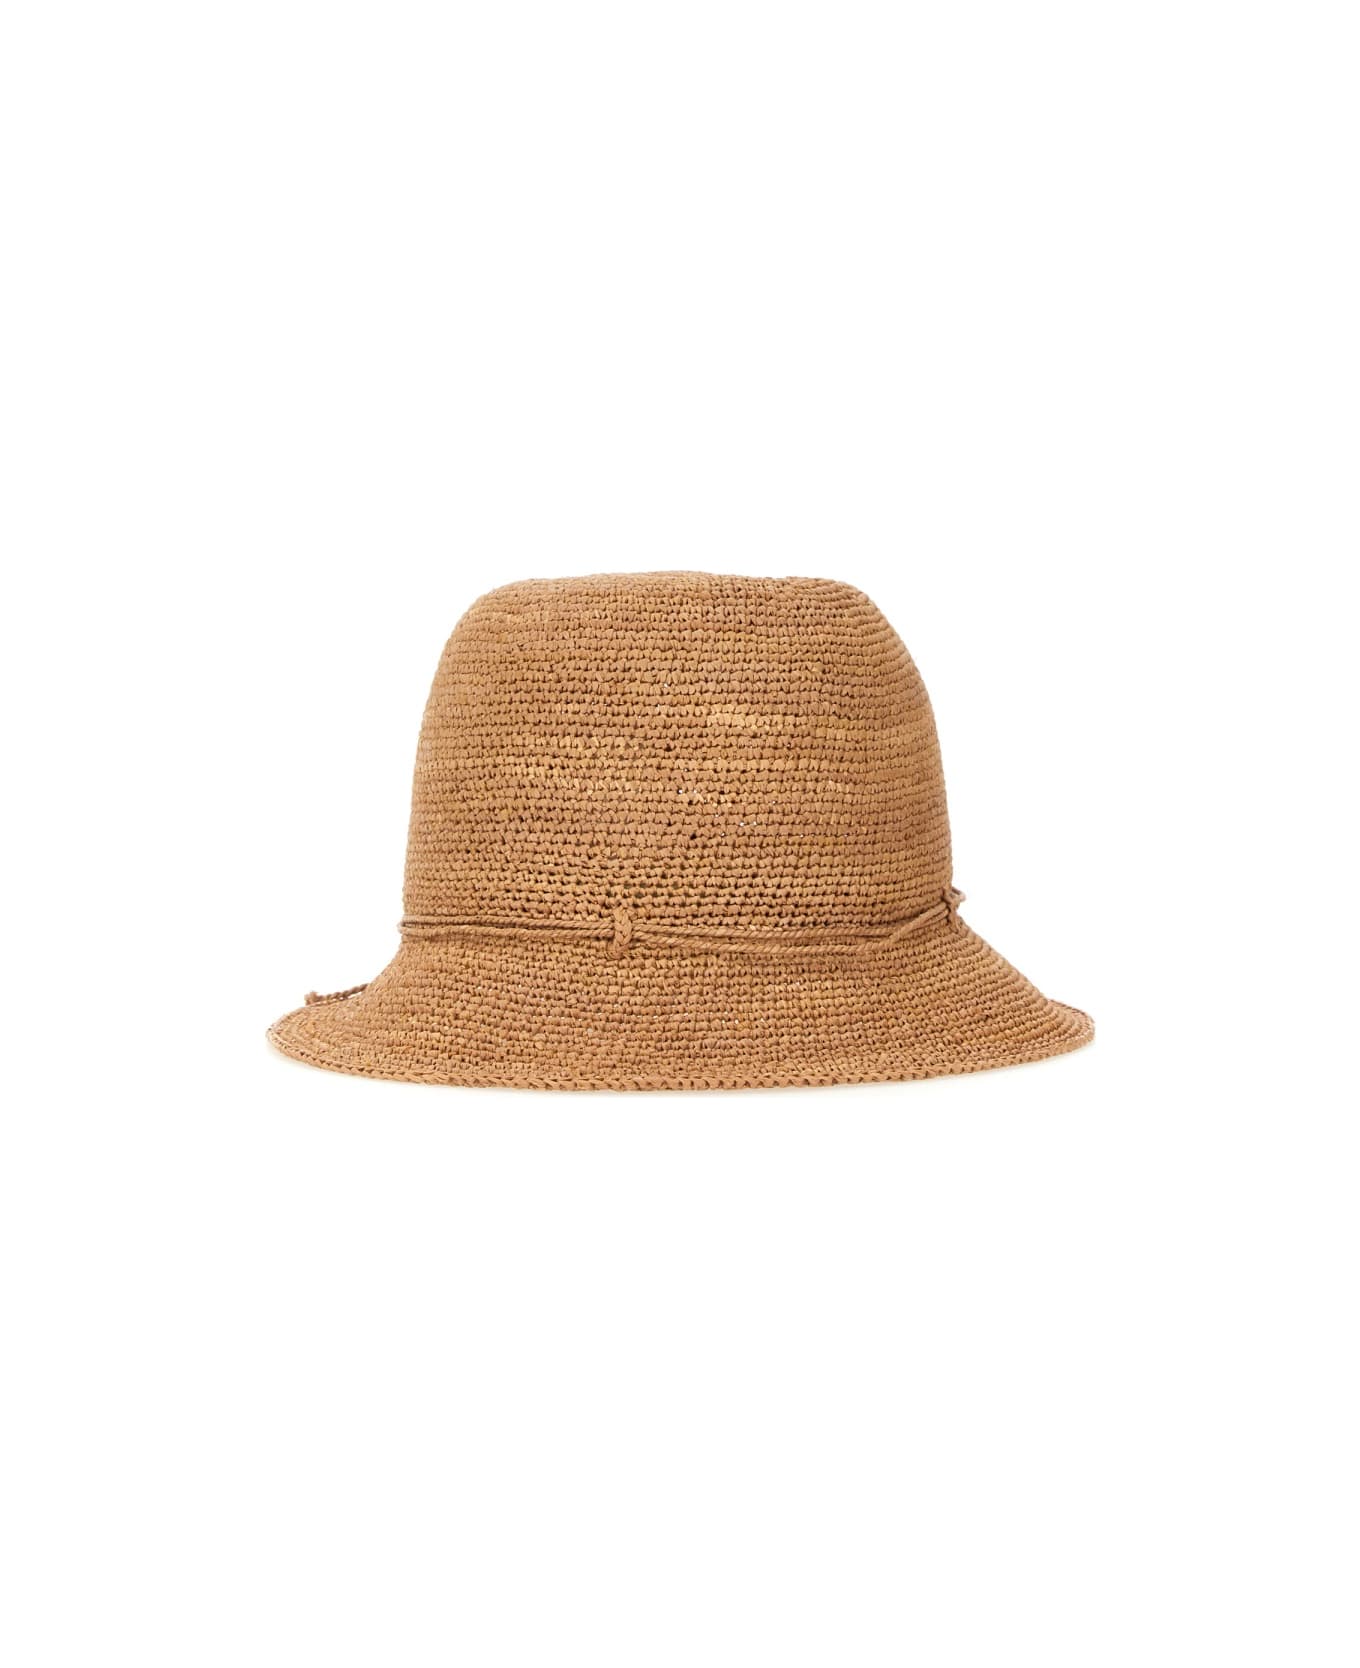 Helen Kaminski "villa 6" Hat - BEIGE 帽子